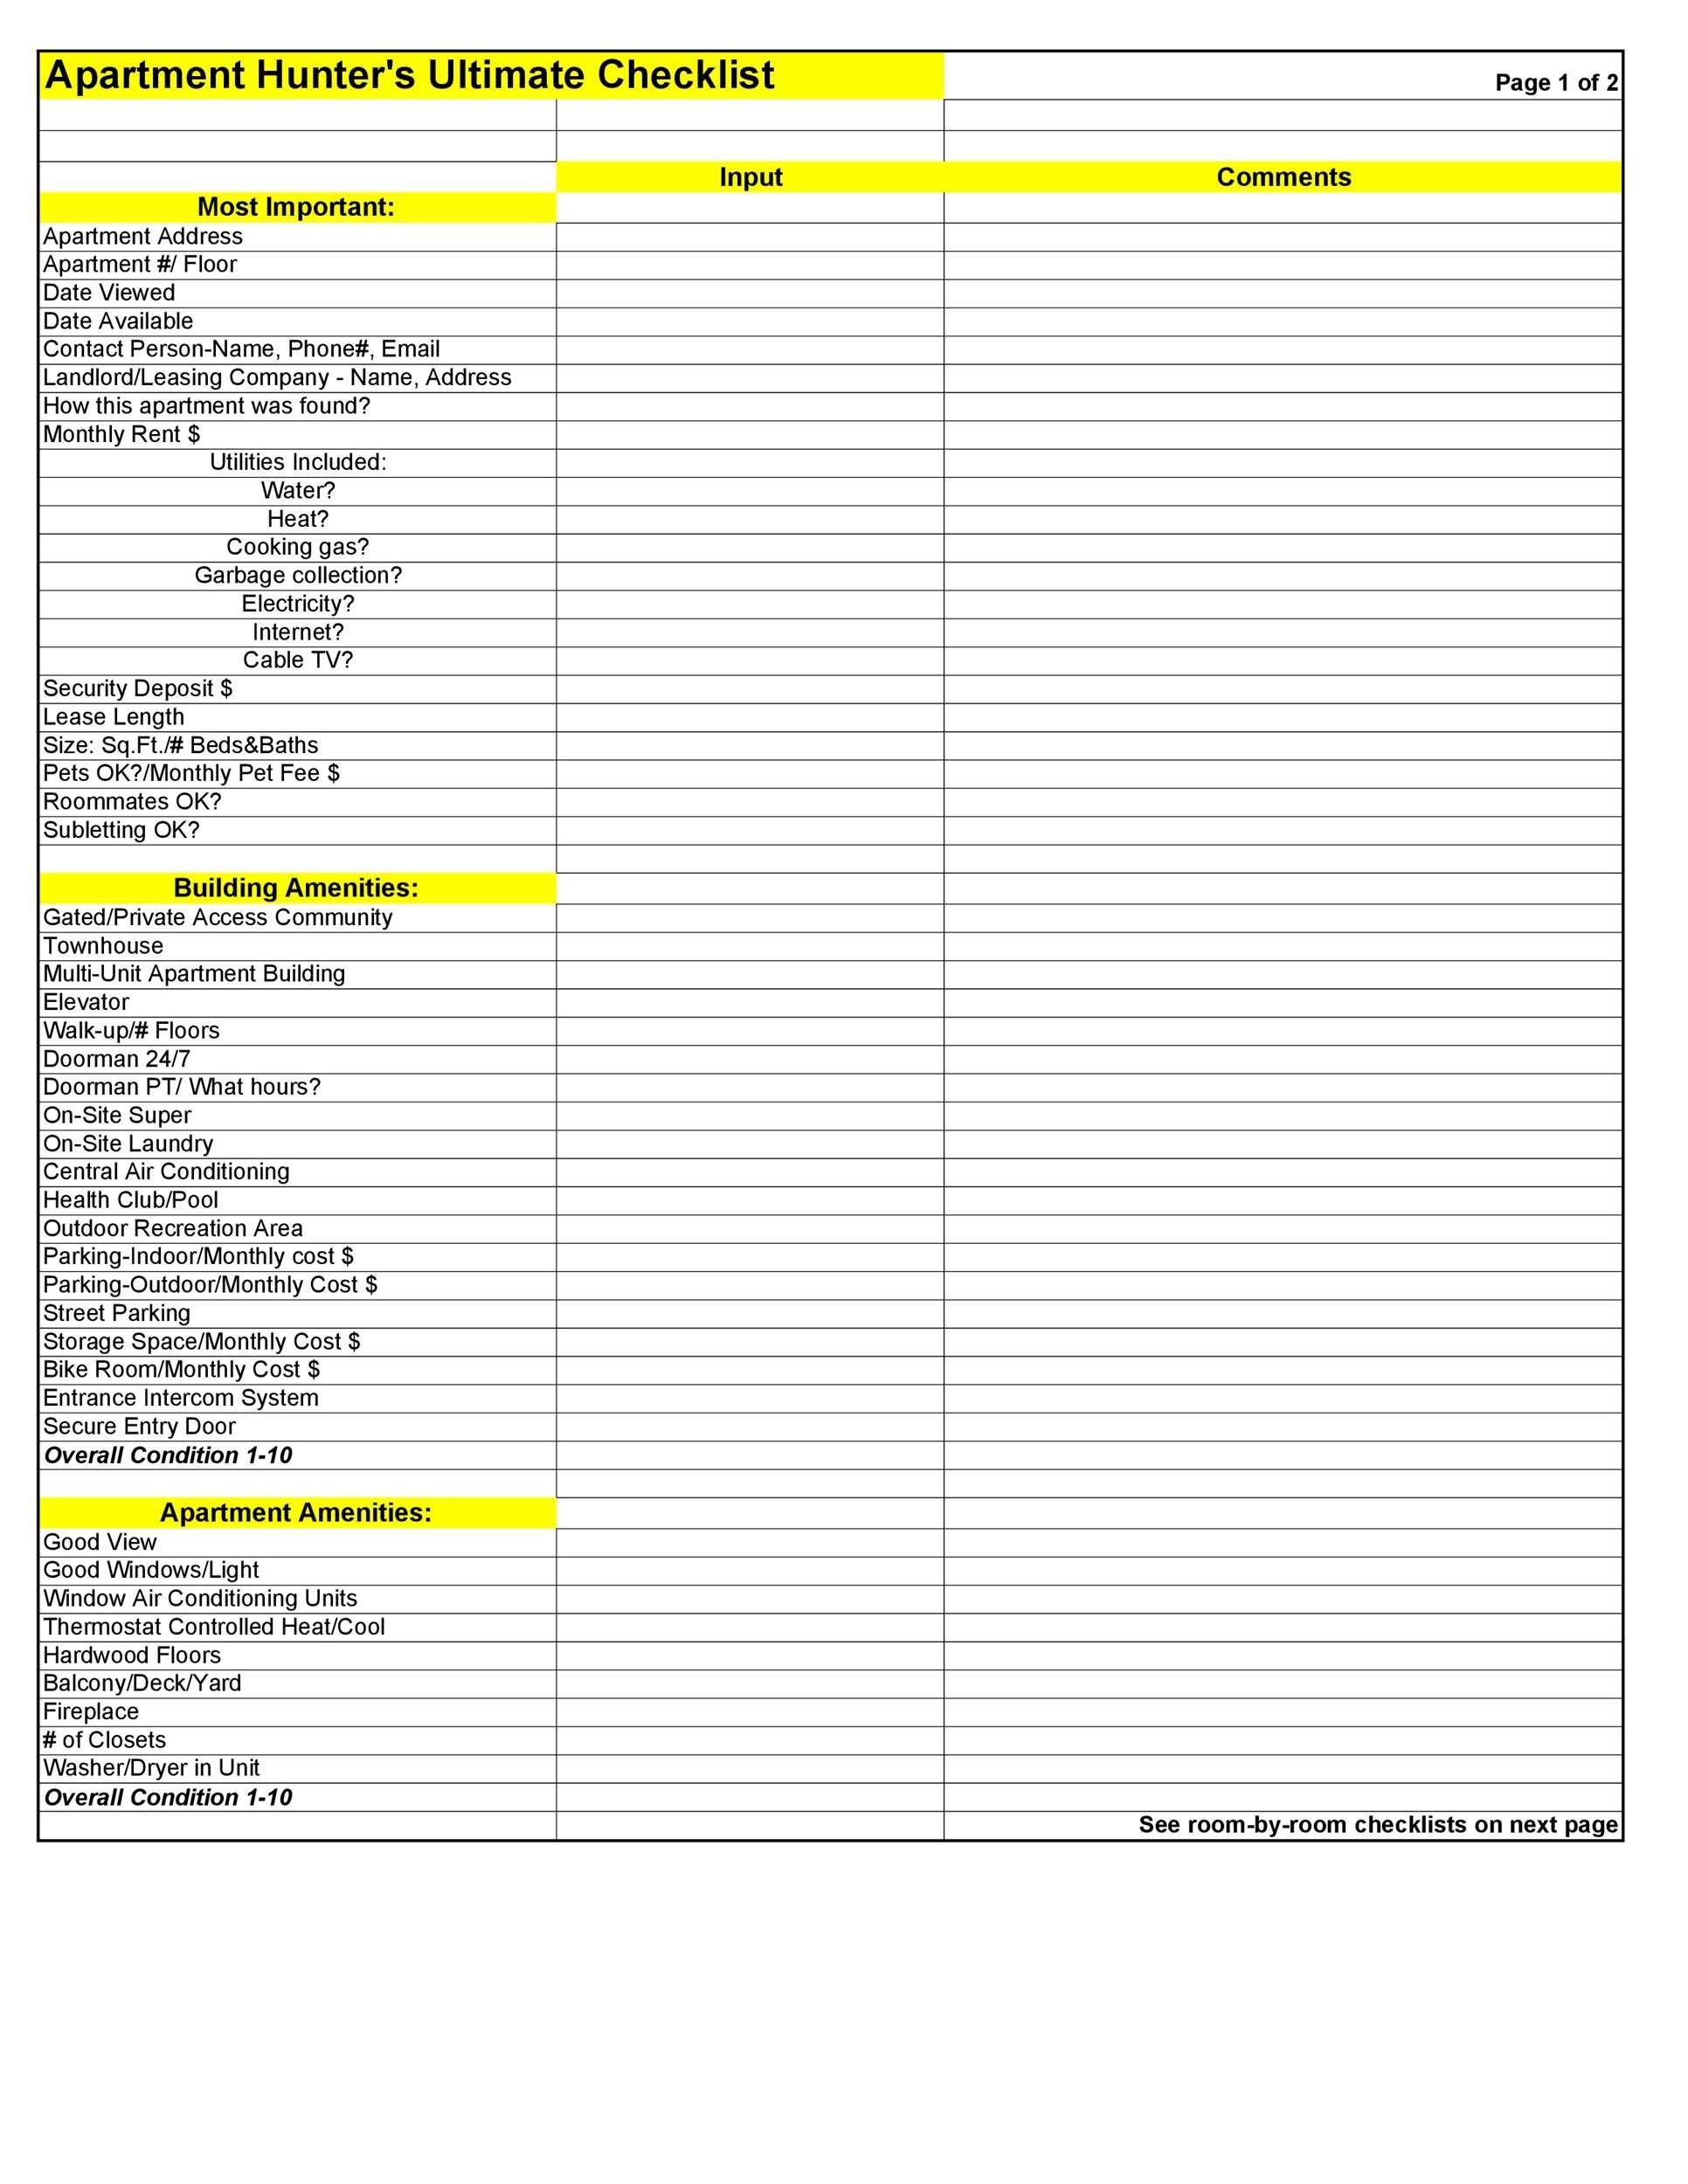 Free apartment checklist 21